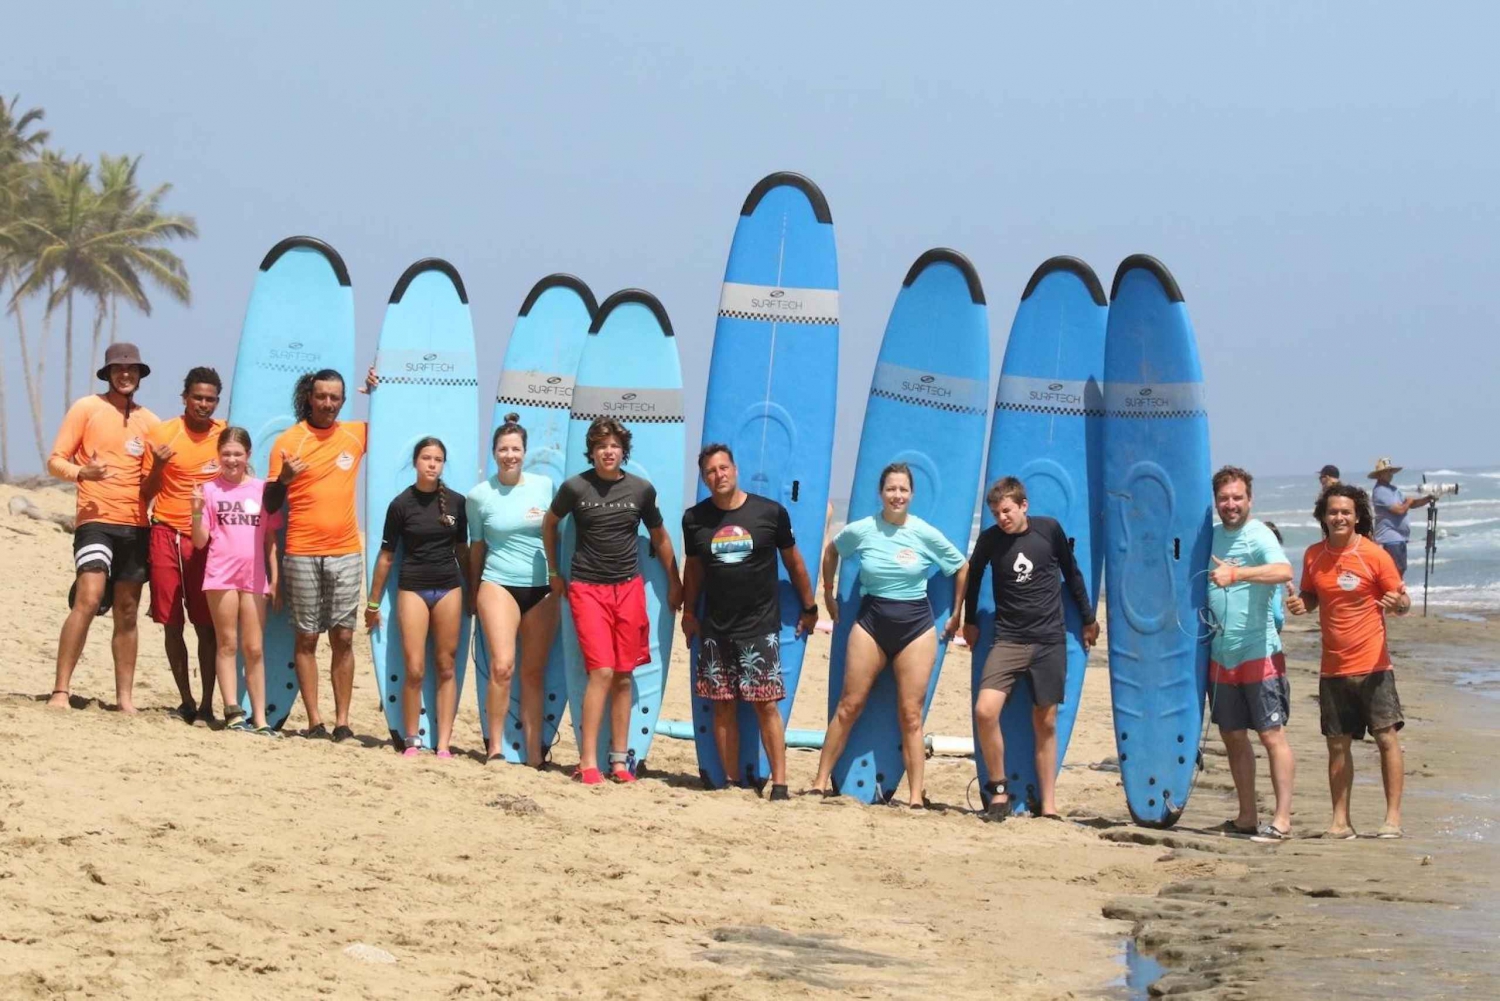 Cabarete: Surf lesson at the beautiful Playa Encuentro